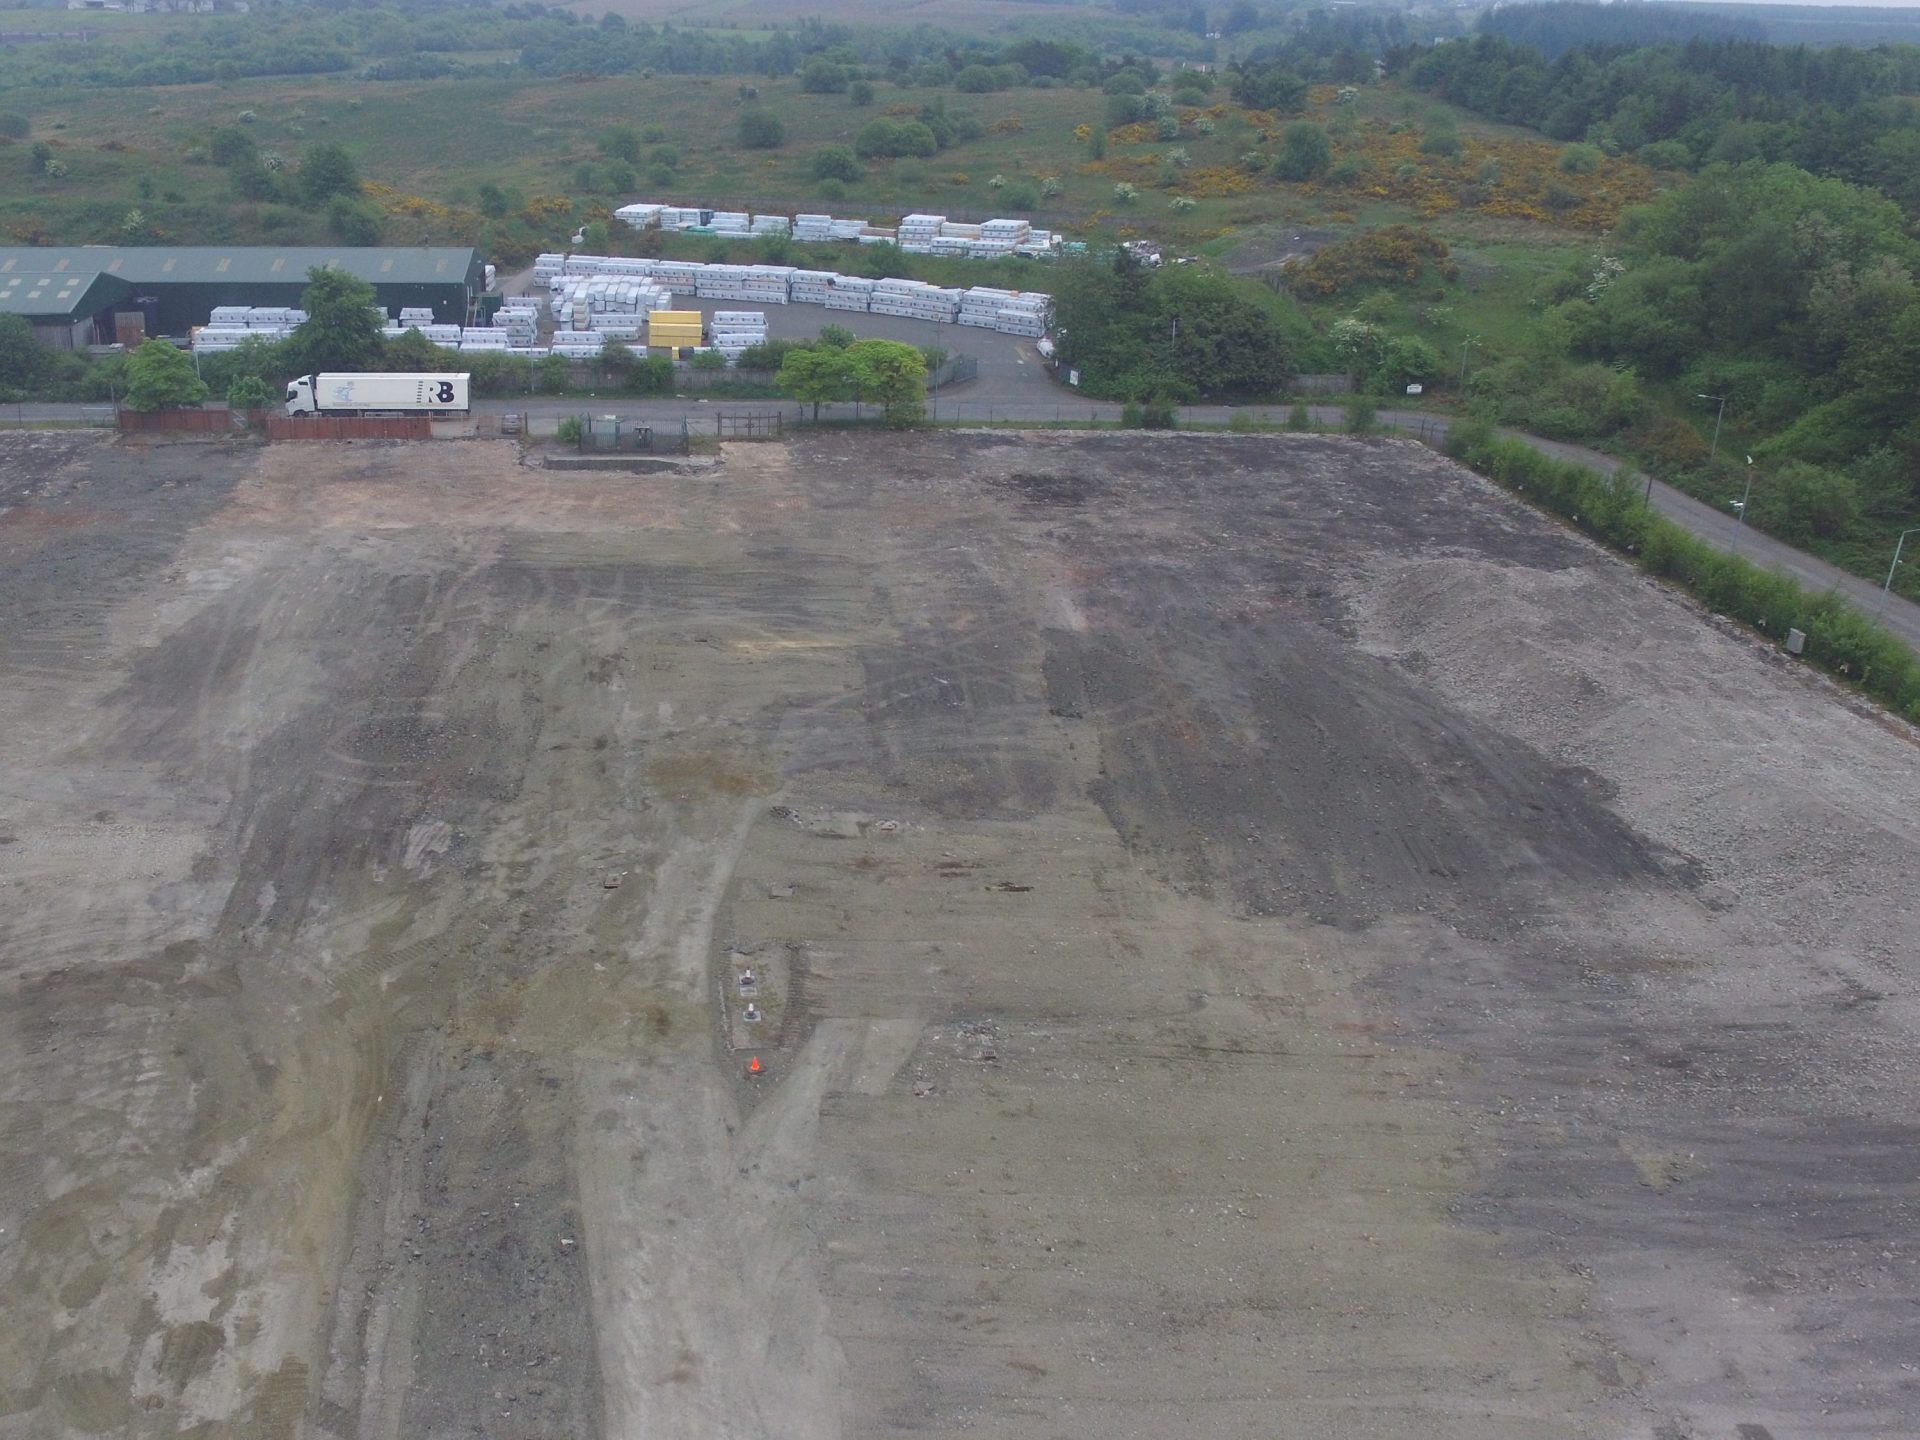 Braithwaite Fit Out near completion of Multi-Million Pound Demolition Scheme to pave way for new distribution centre